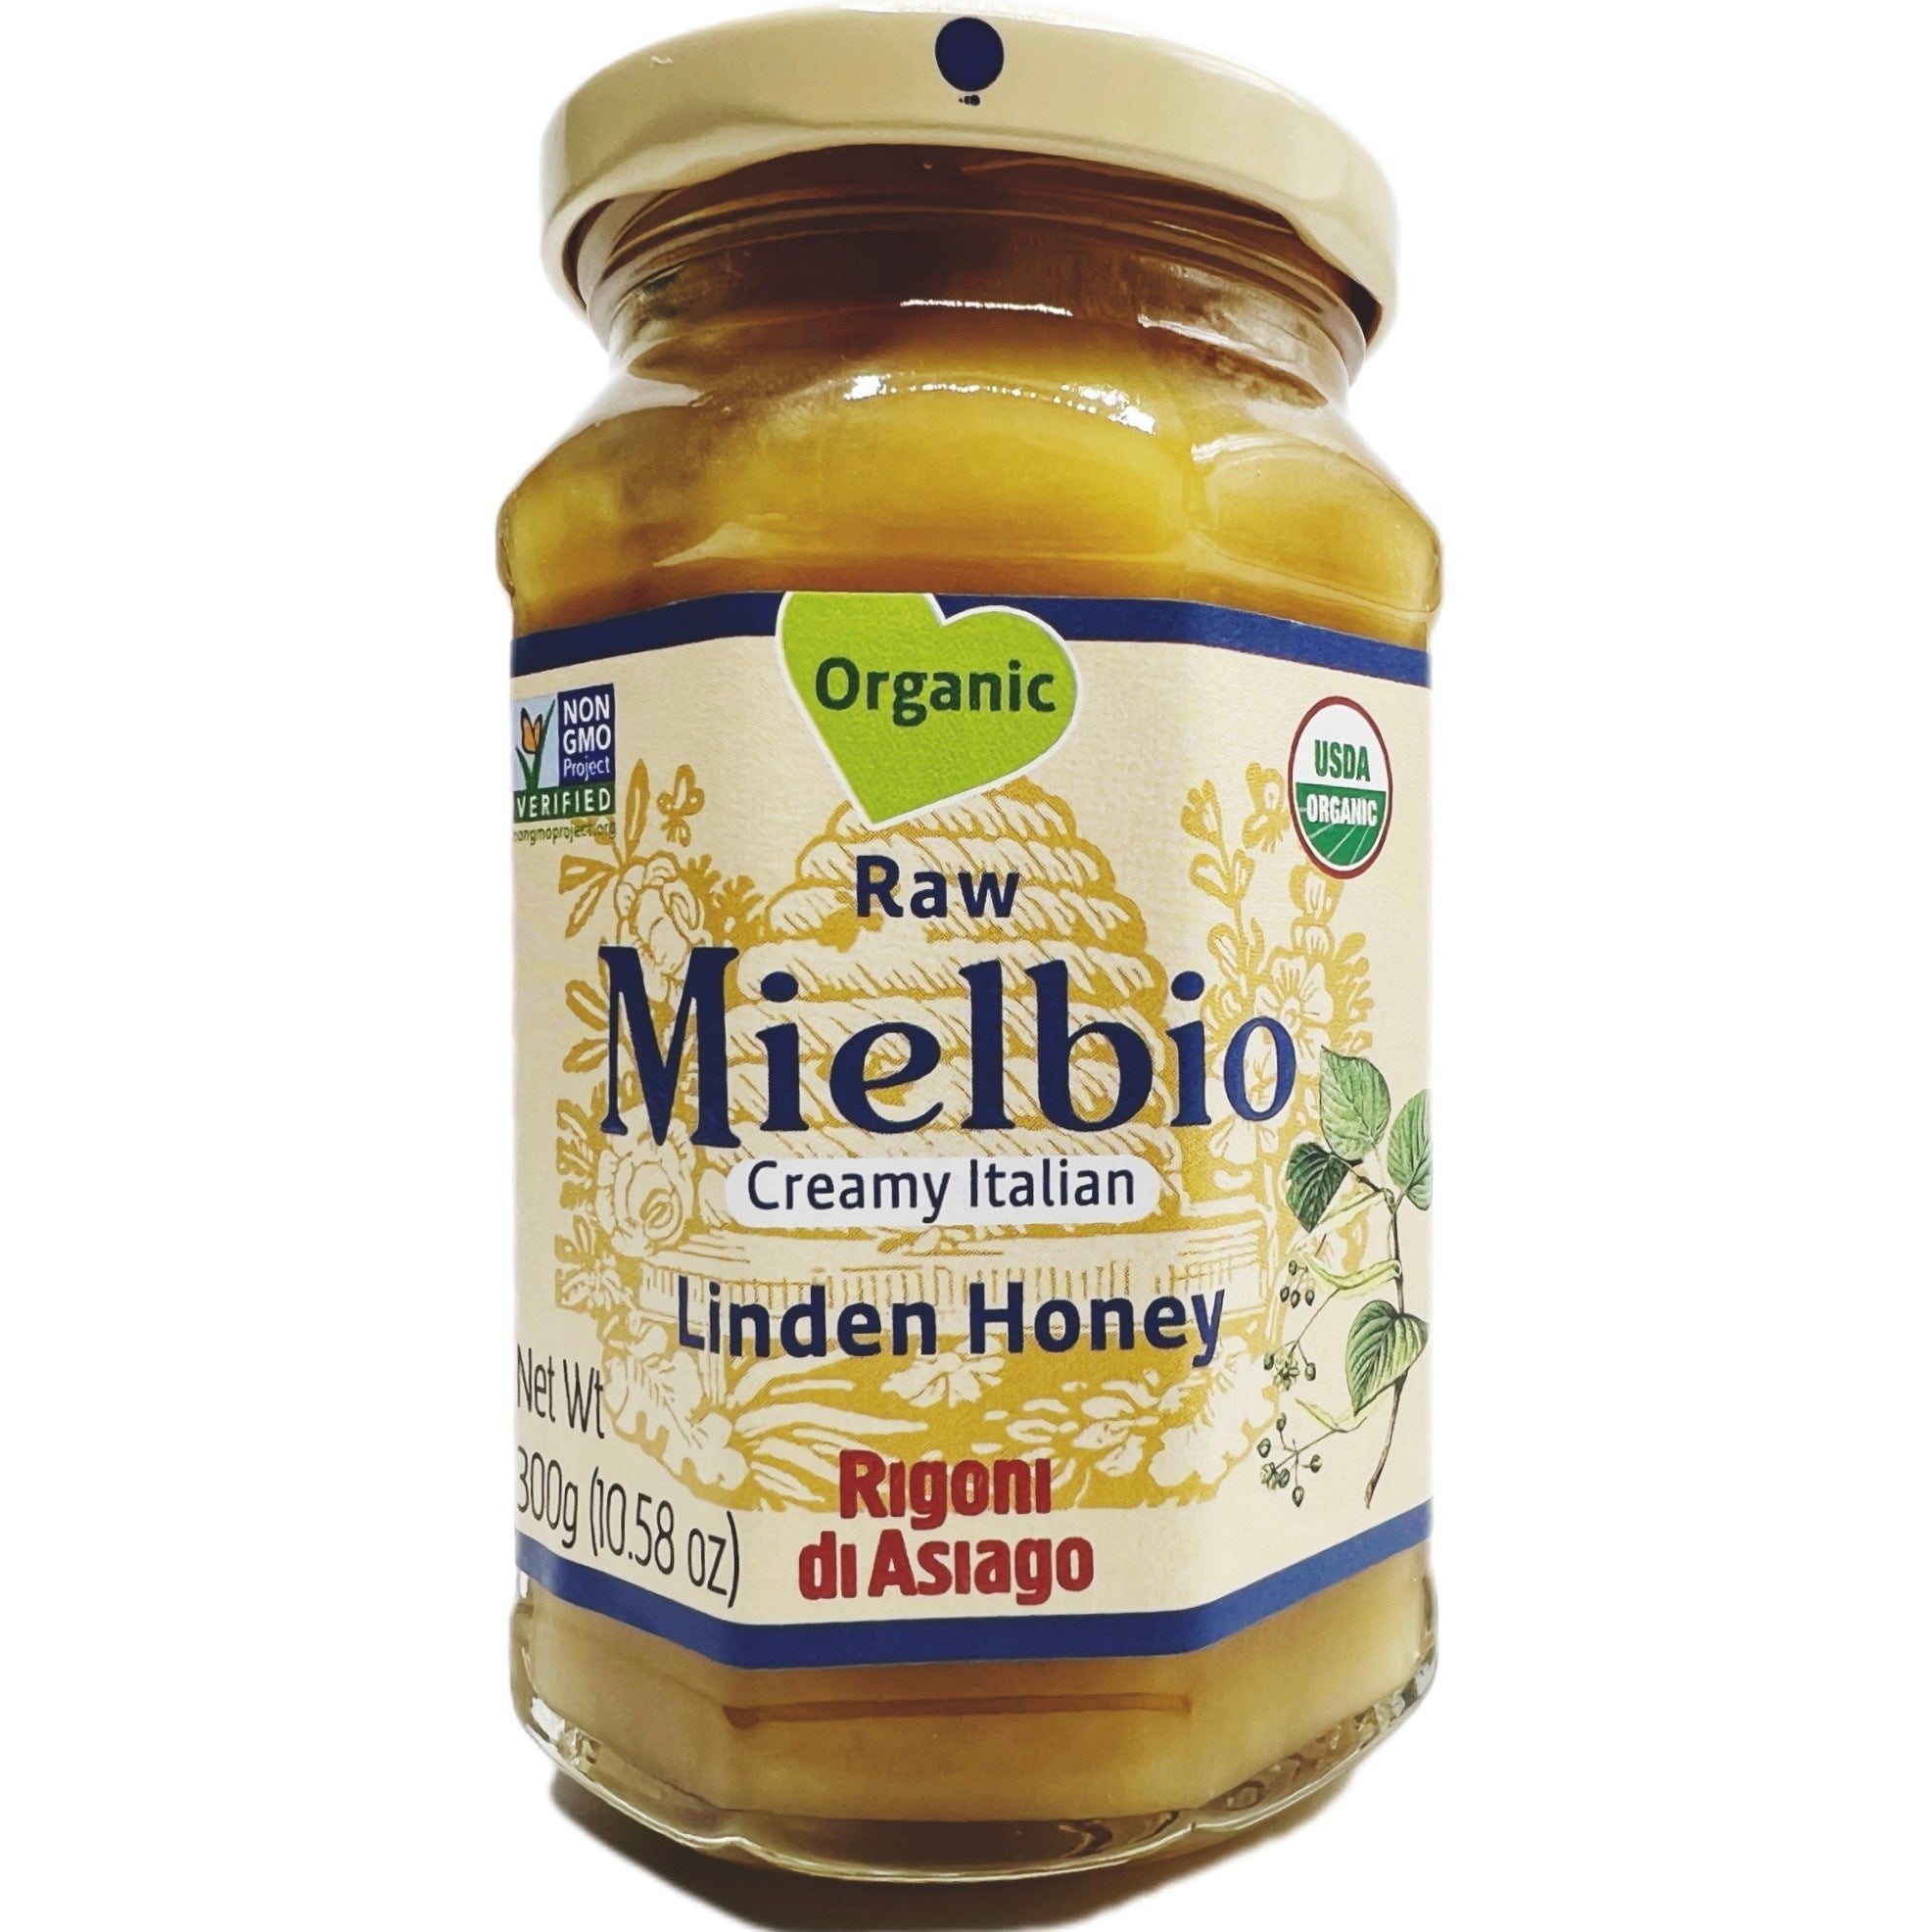 Rigoni di Asiago Organic Linden Honey - 10.5 oz